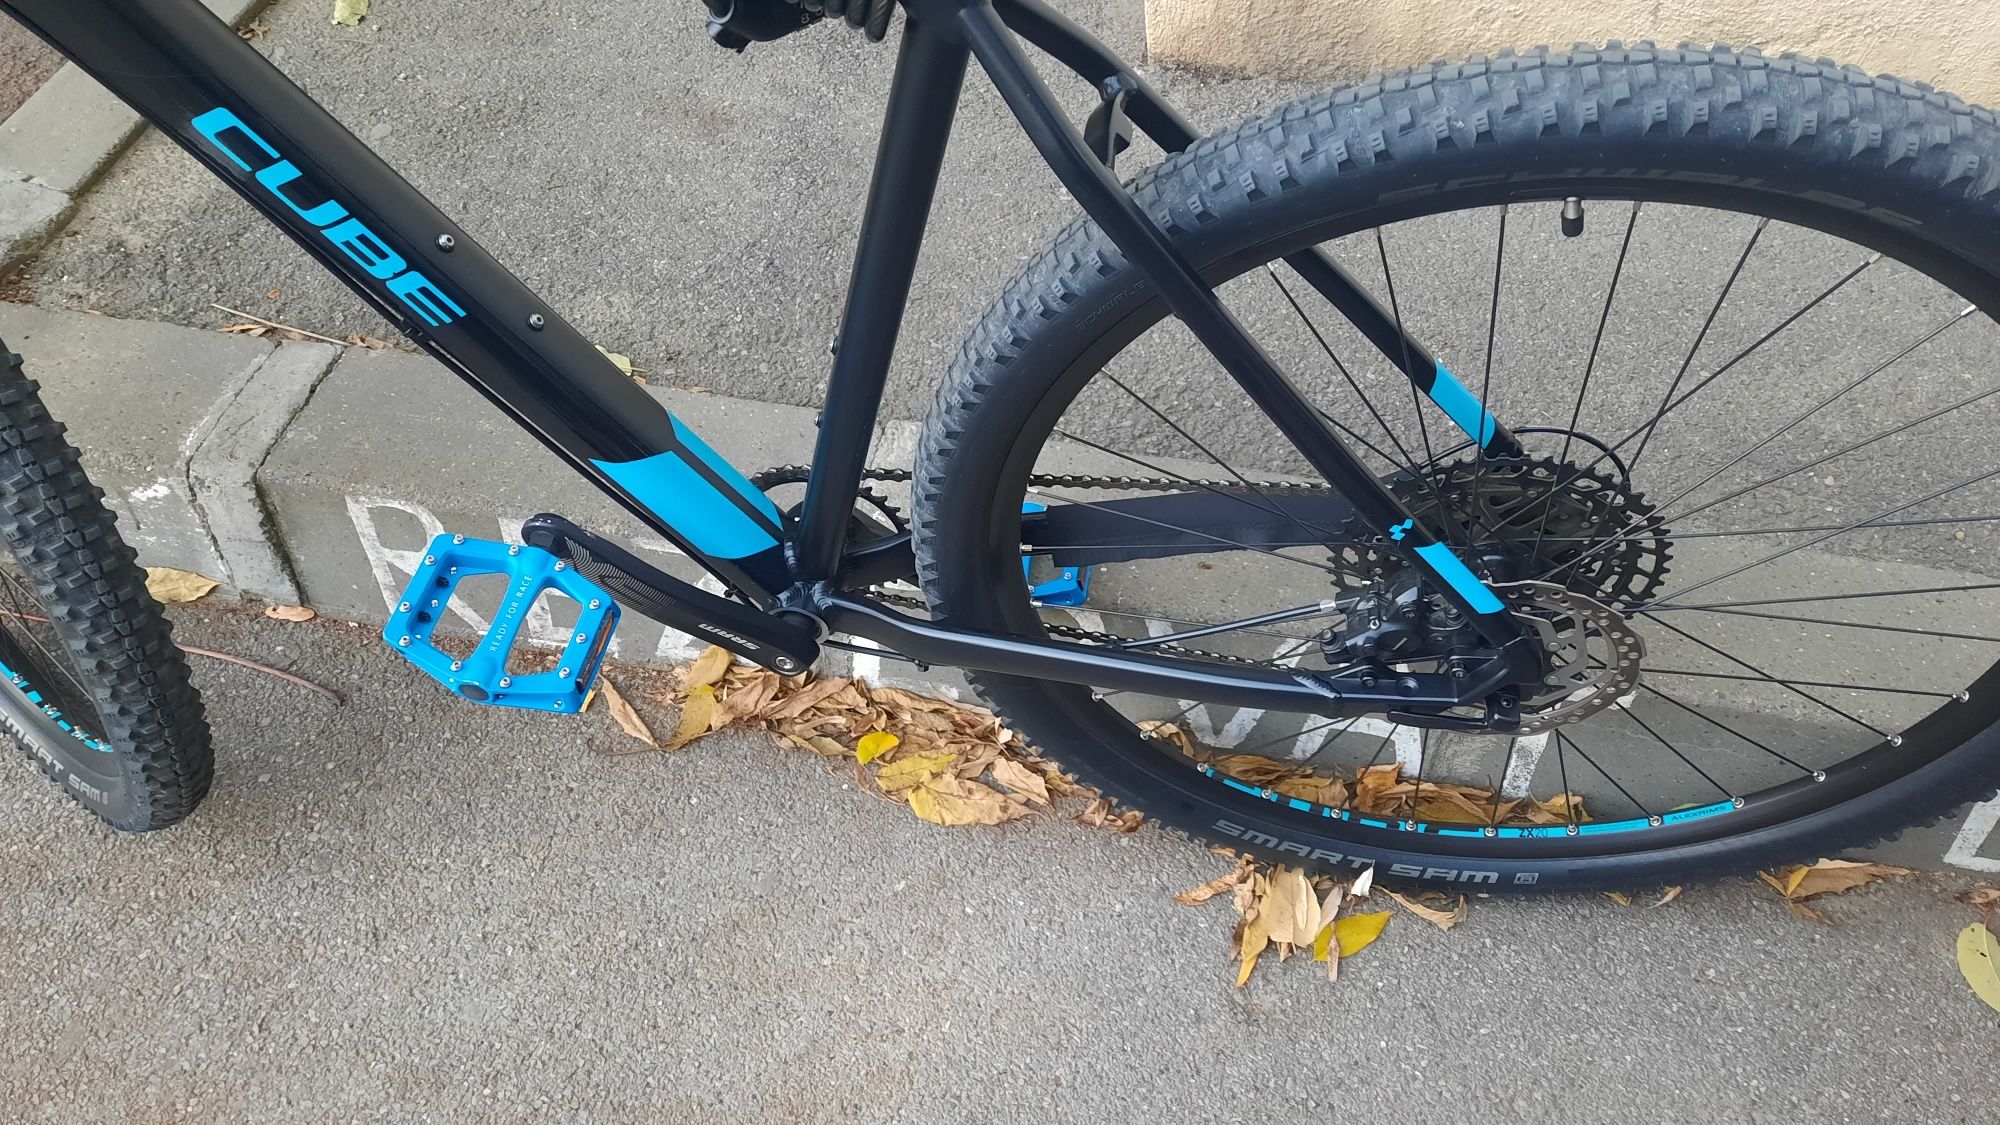 Bicicleta cube analog 2021